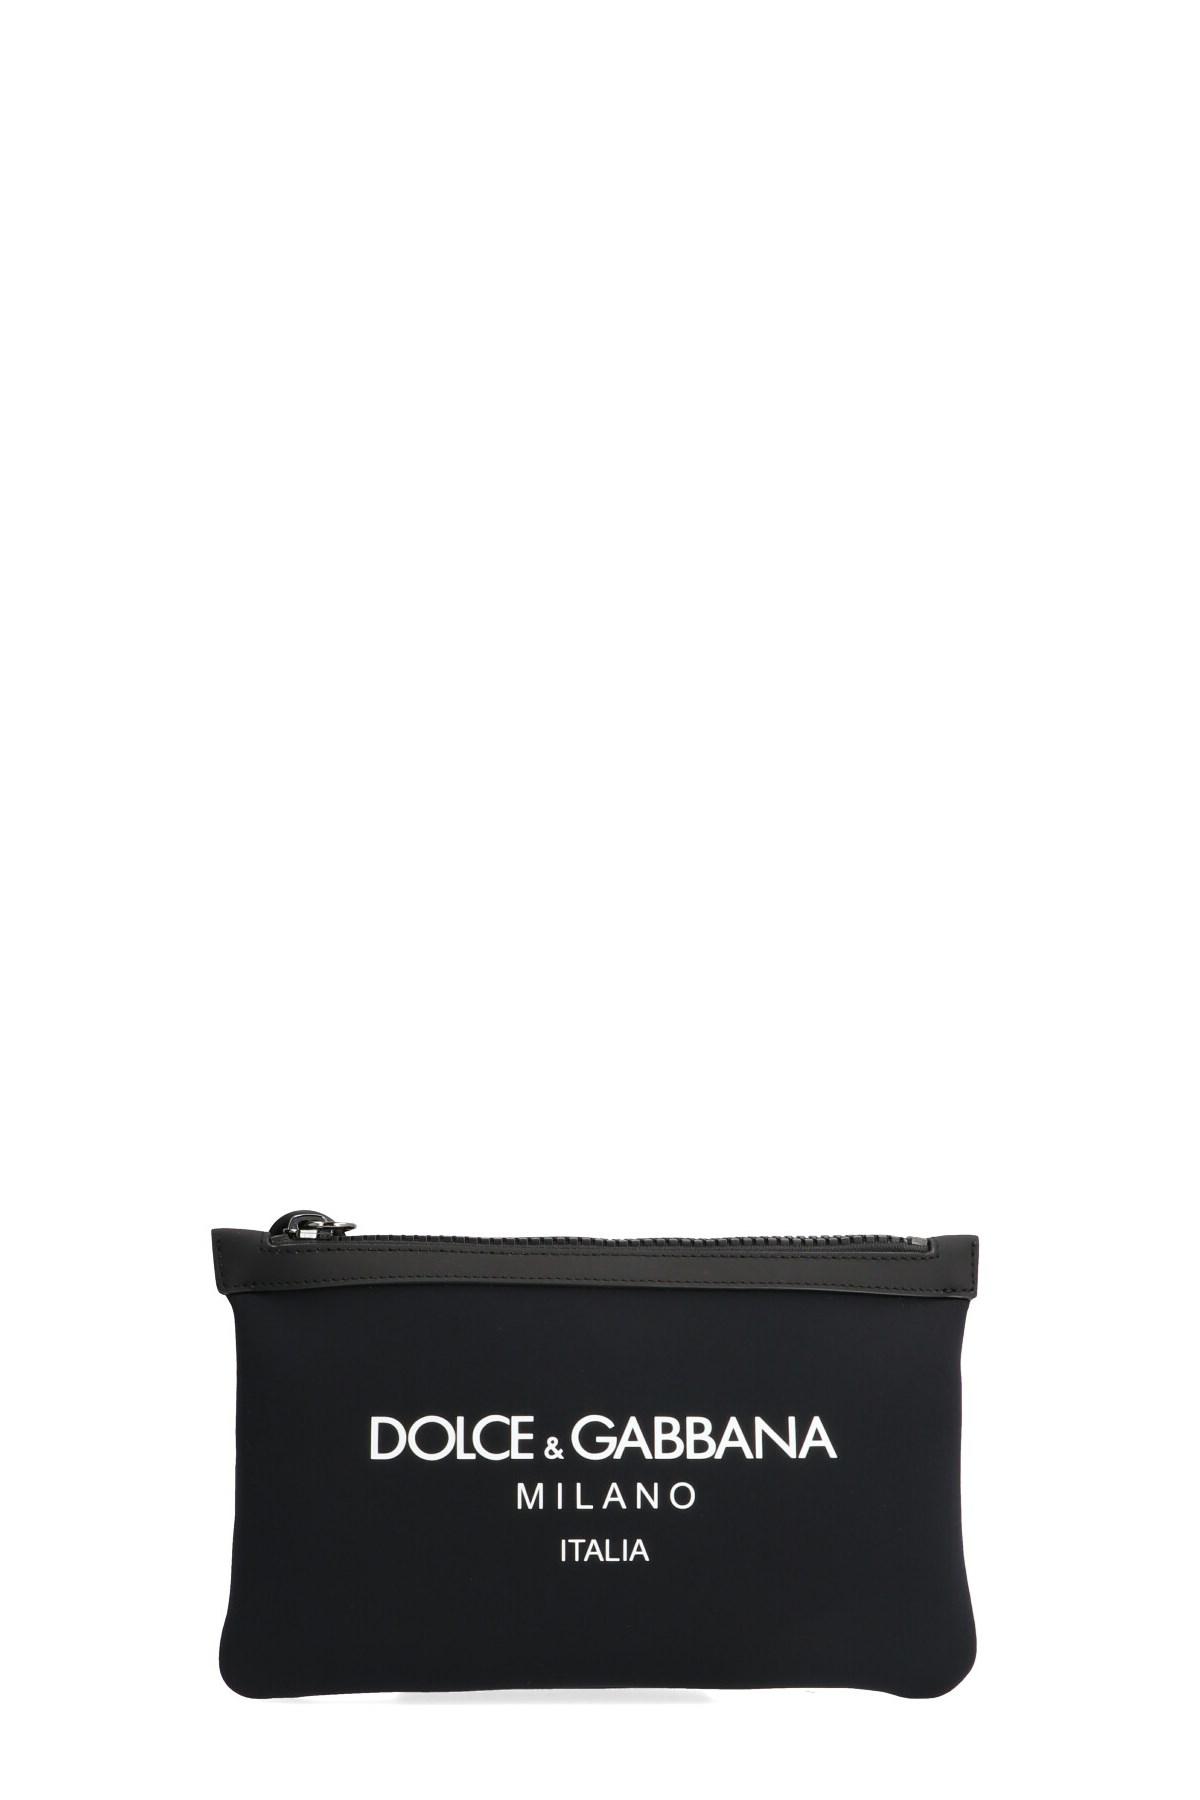 Dolce & Gabbana Logo Fanny Pack in Black for Men - Lyst